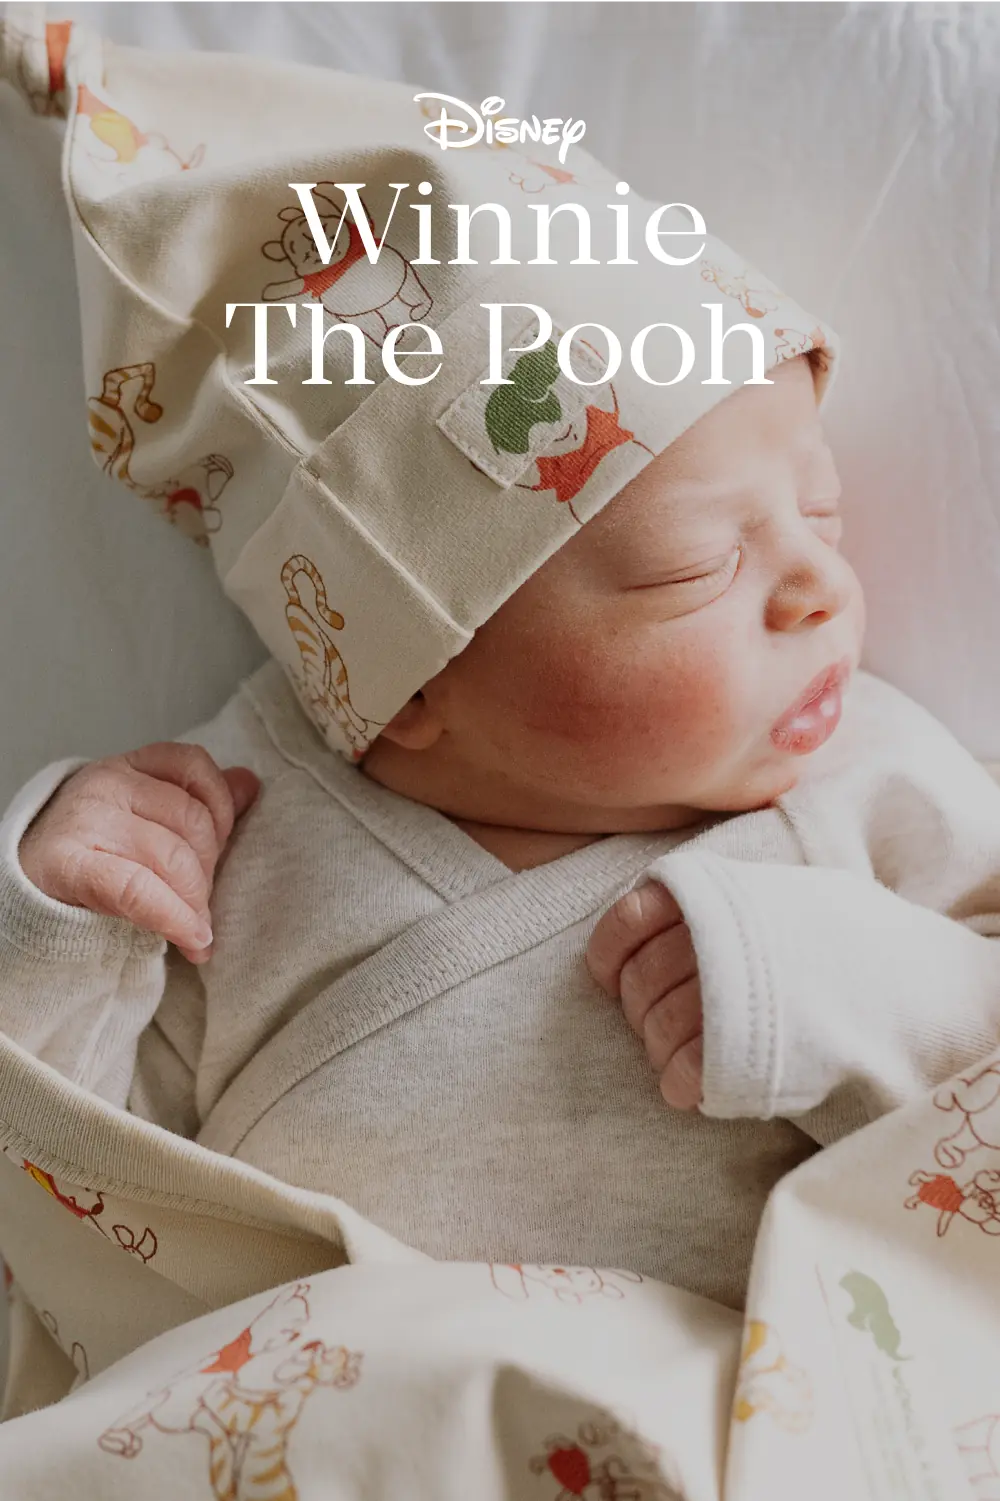 Newborn in Winnie The Pooh print clothing